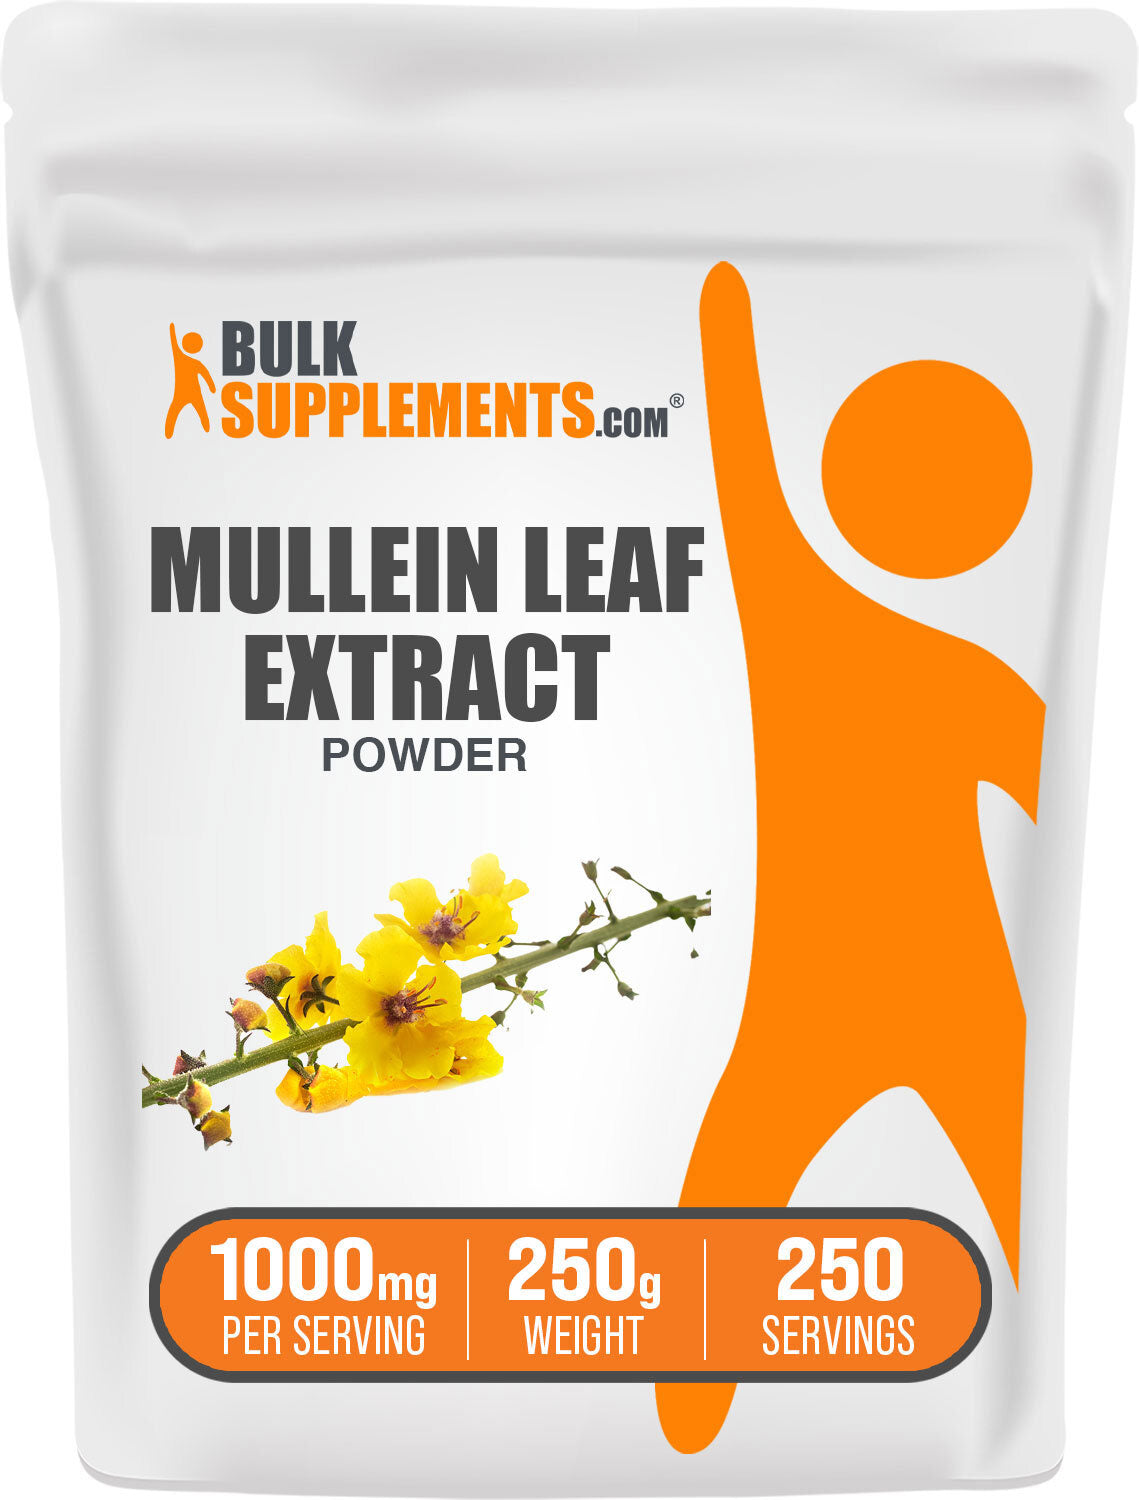 BulkSupplements.com Mullein Leaf Extract Powder 250g bag